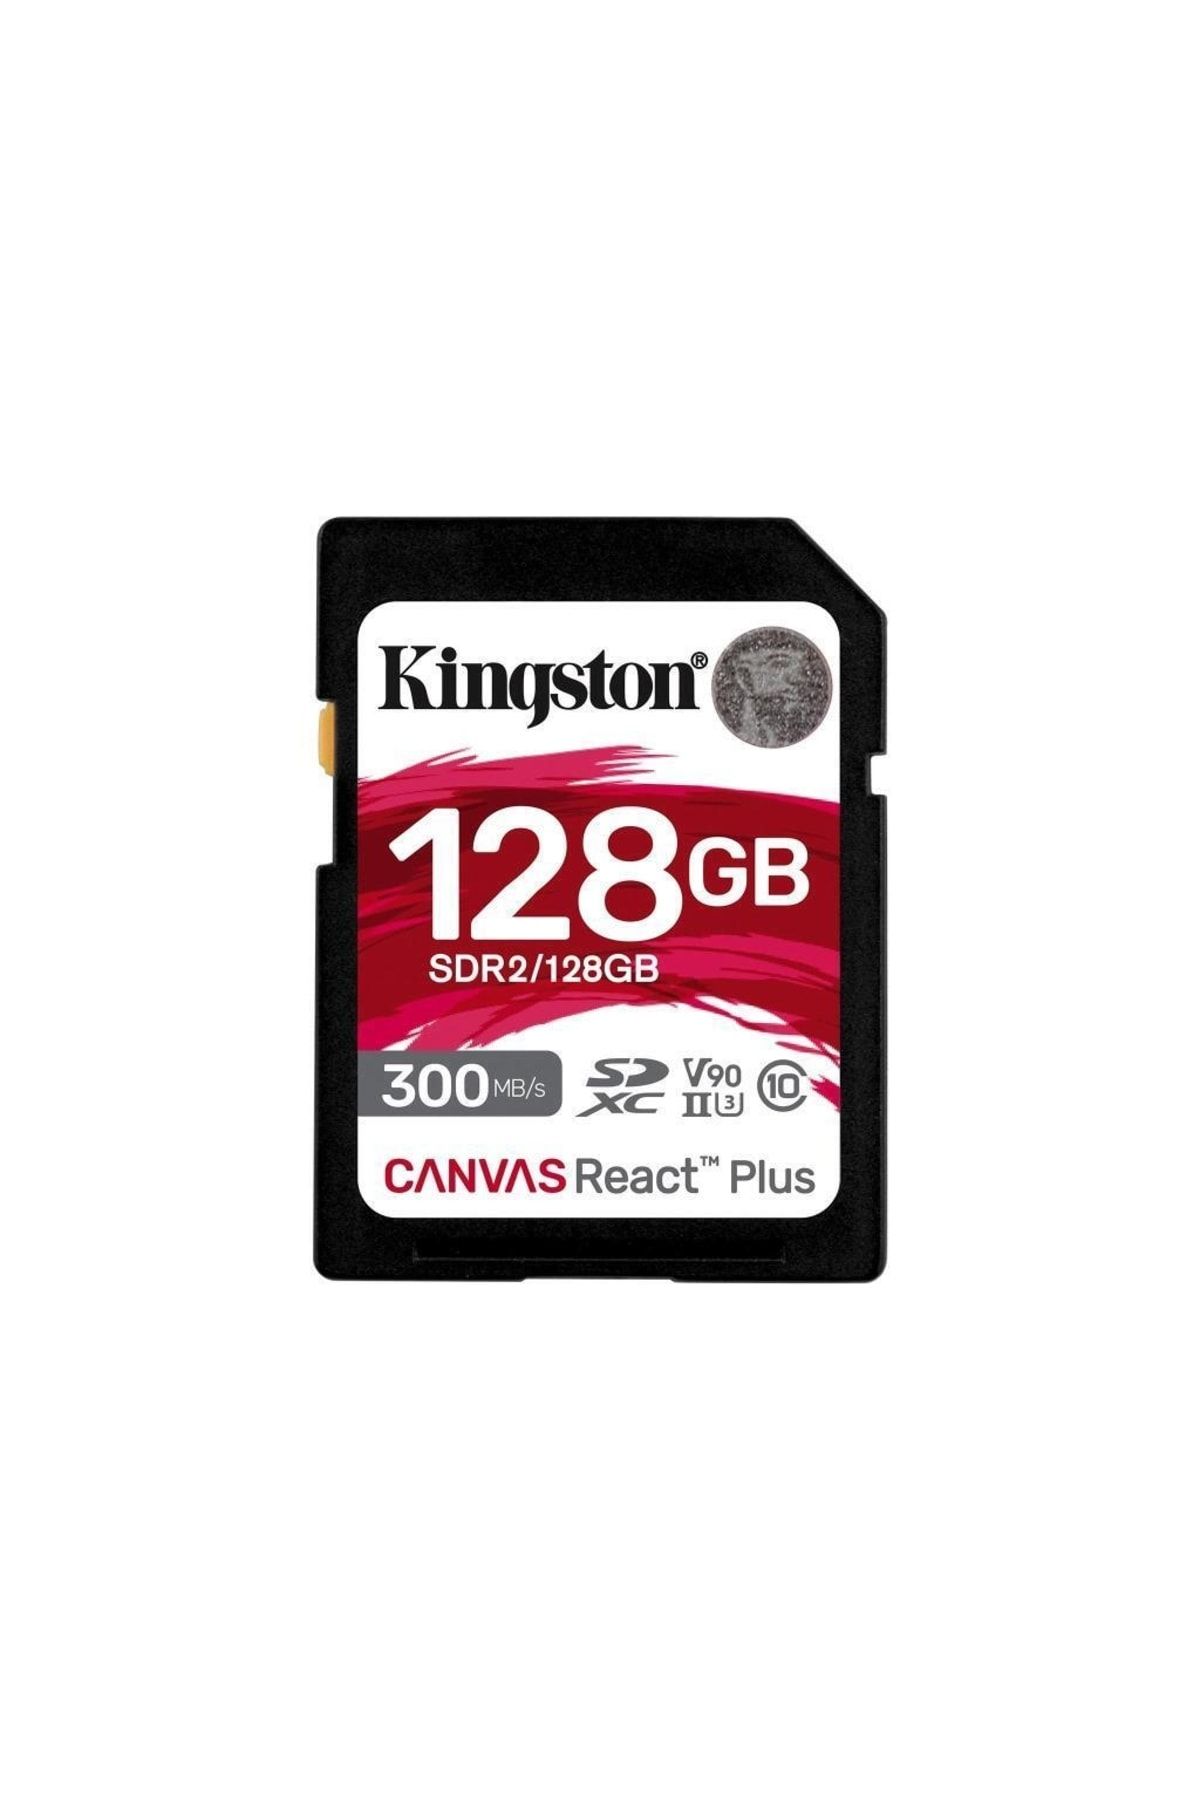 Kingston 128gb Canvas React Plus Sd Hafıza Kartı Sdr2/128gb